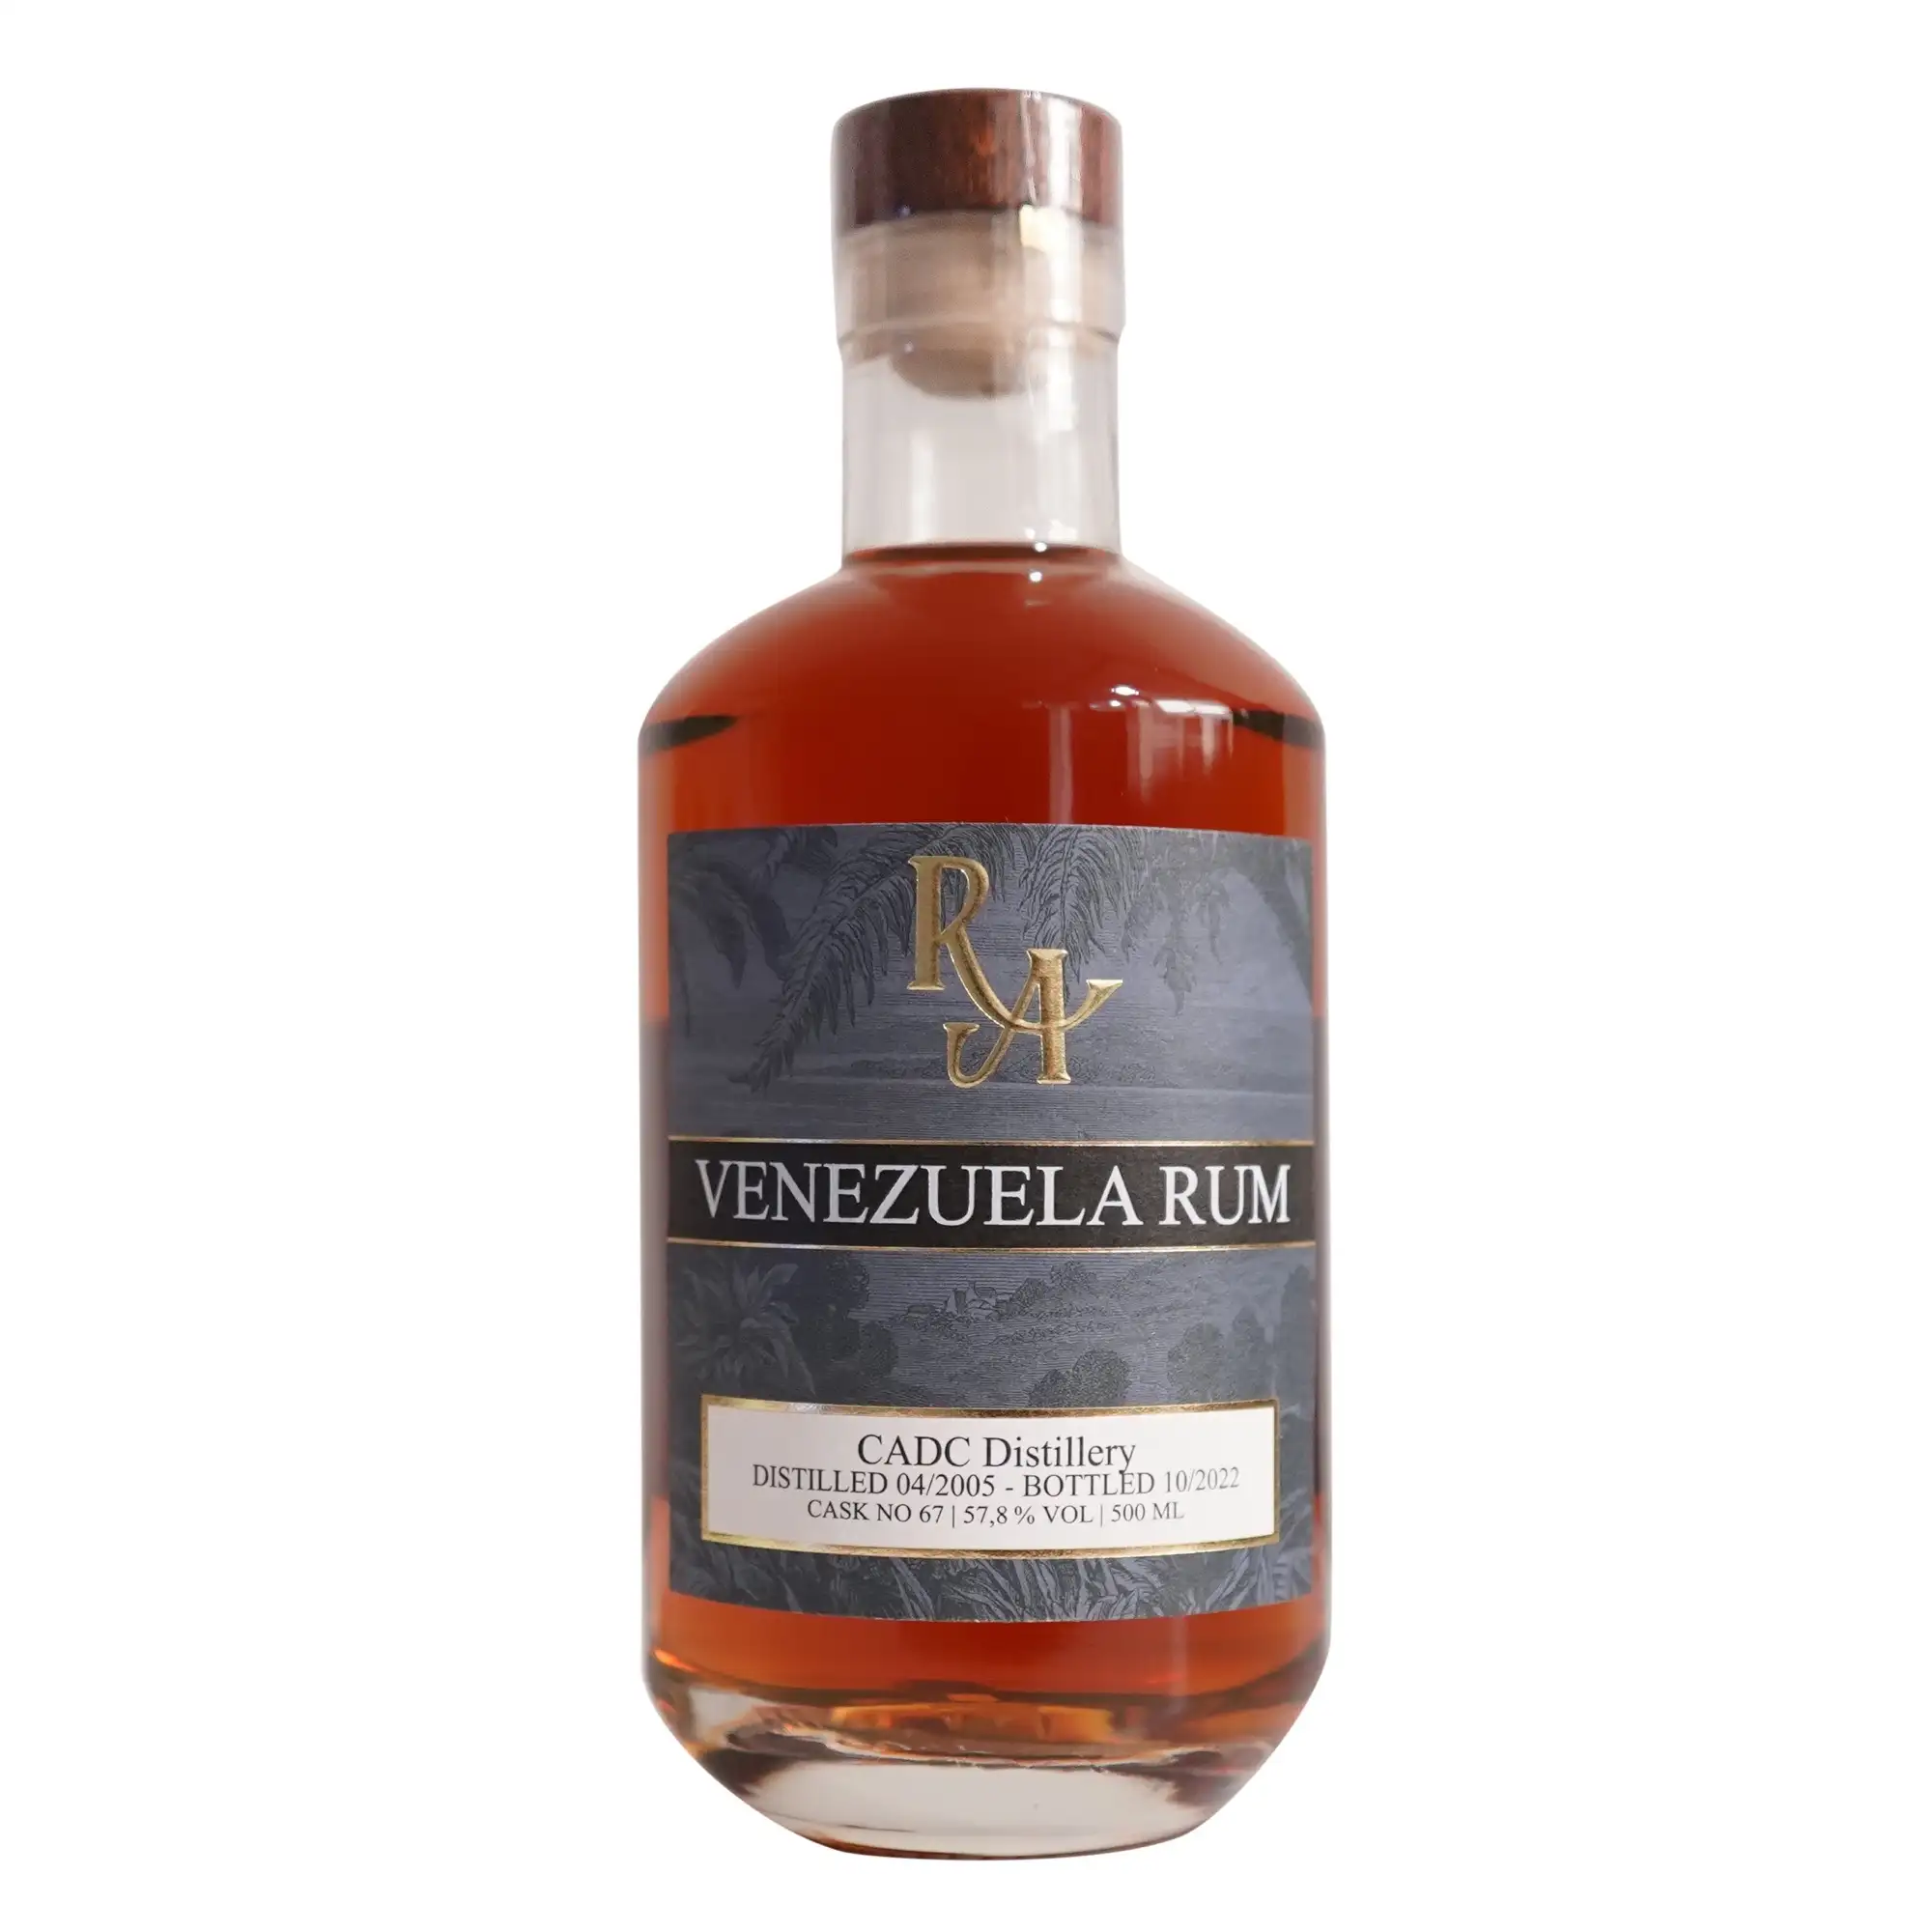 Image of the front of the bottle of the rum Rum Artesanal Venezuela Rum